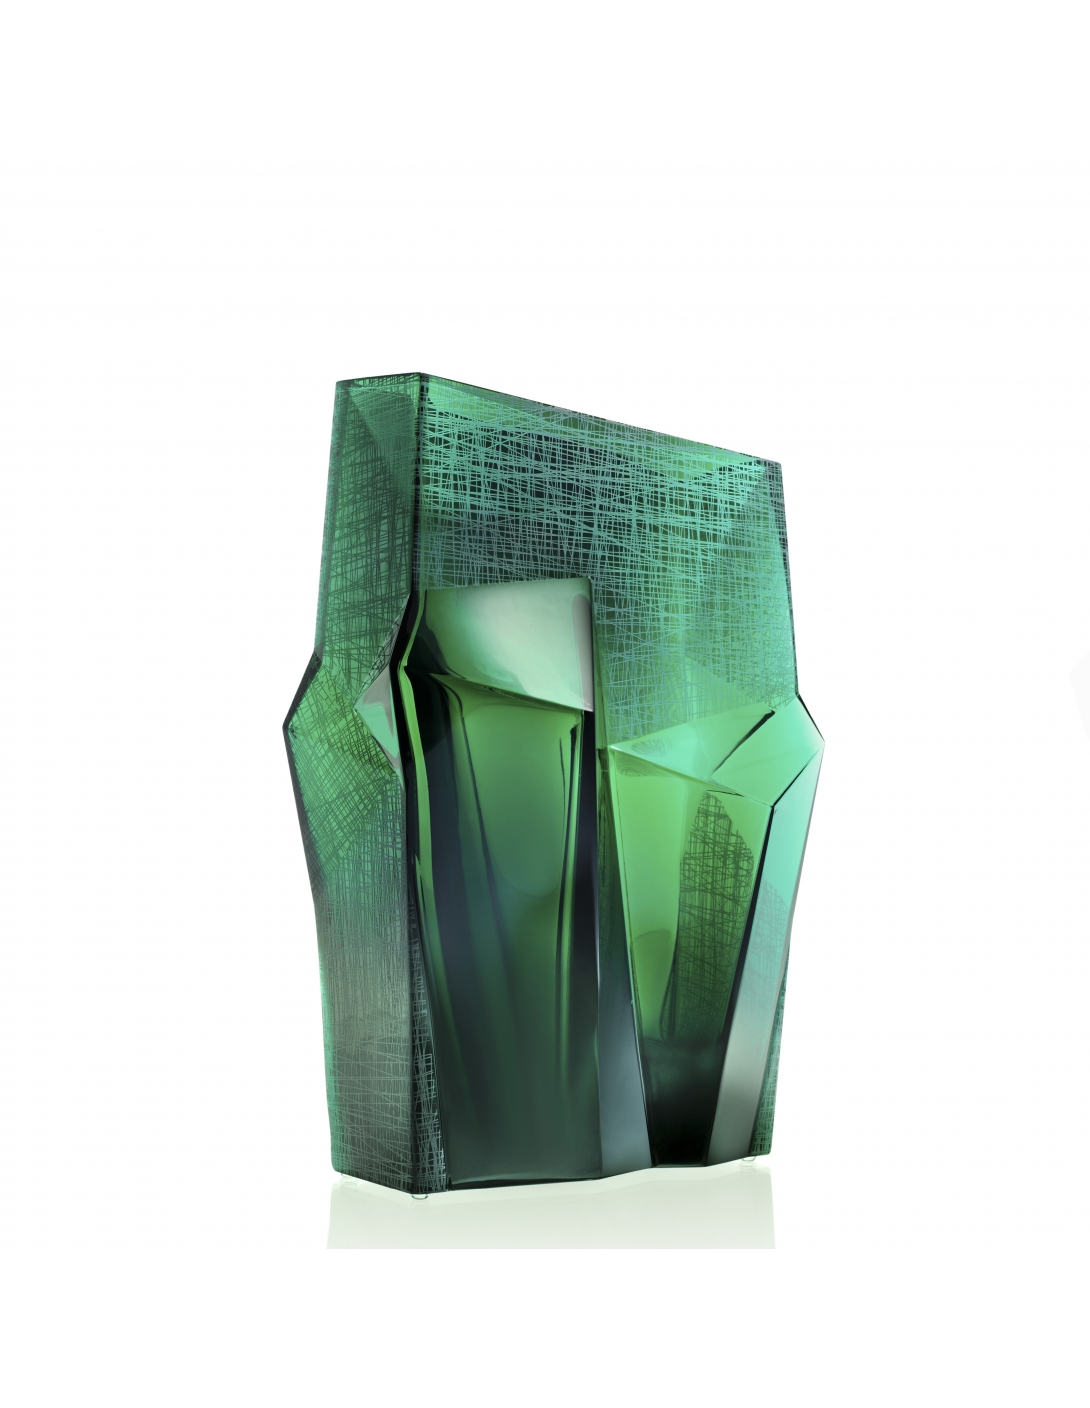 Metropolis Vase